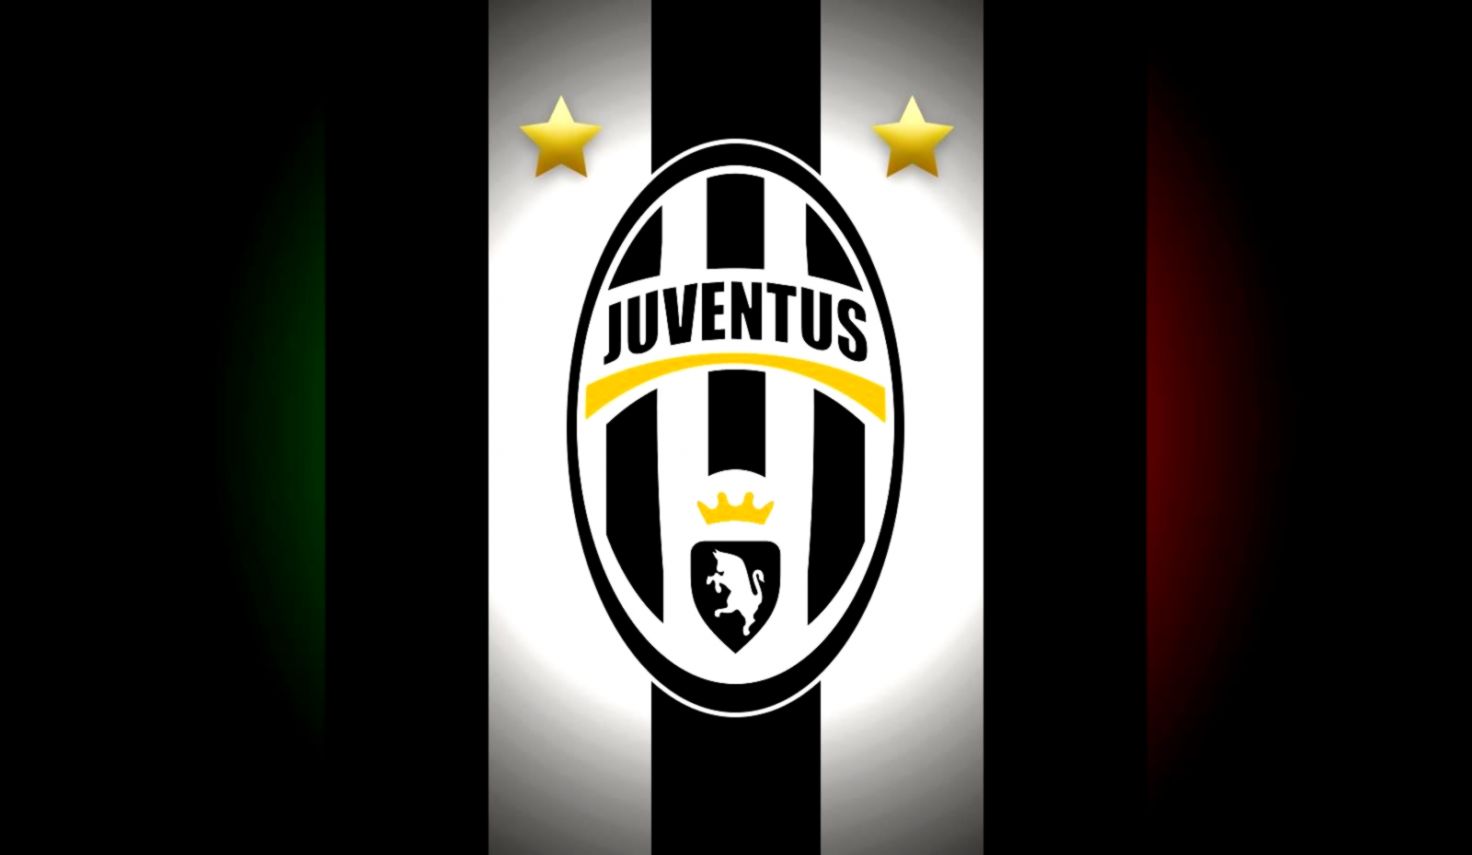 3 Juventus Hd Wallpapers Backgrounds Wallpaper Abyss - Juventus Fc Logo 2016 - HD Wallpaper 